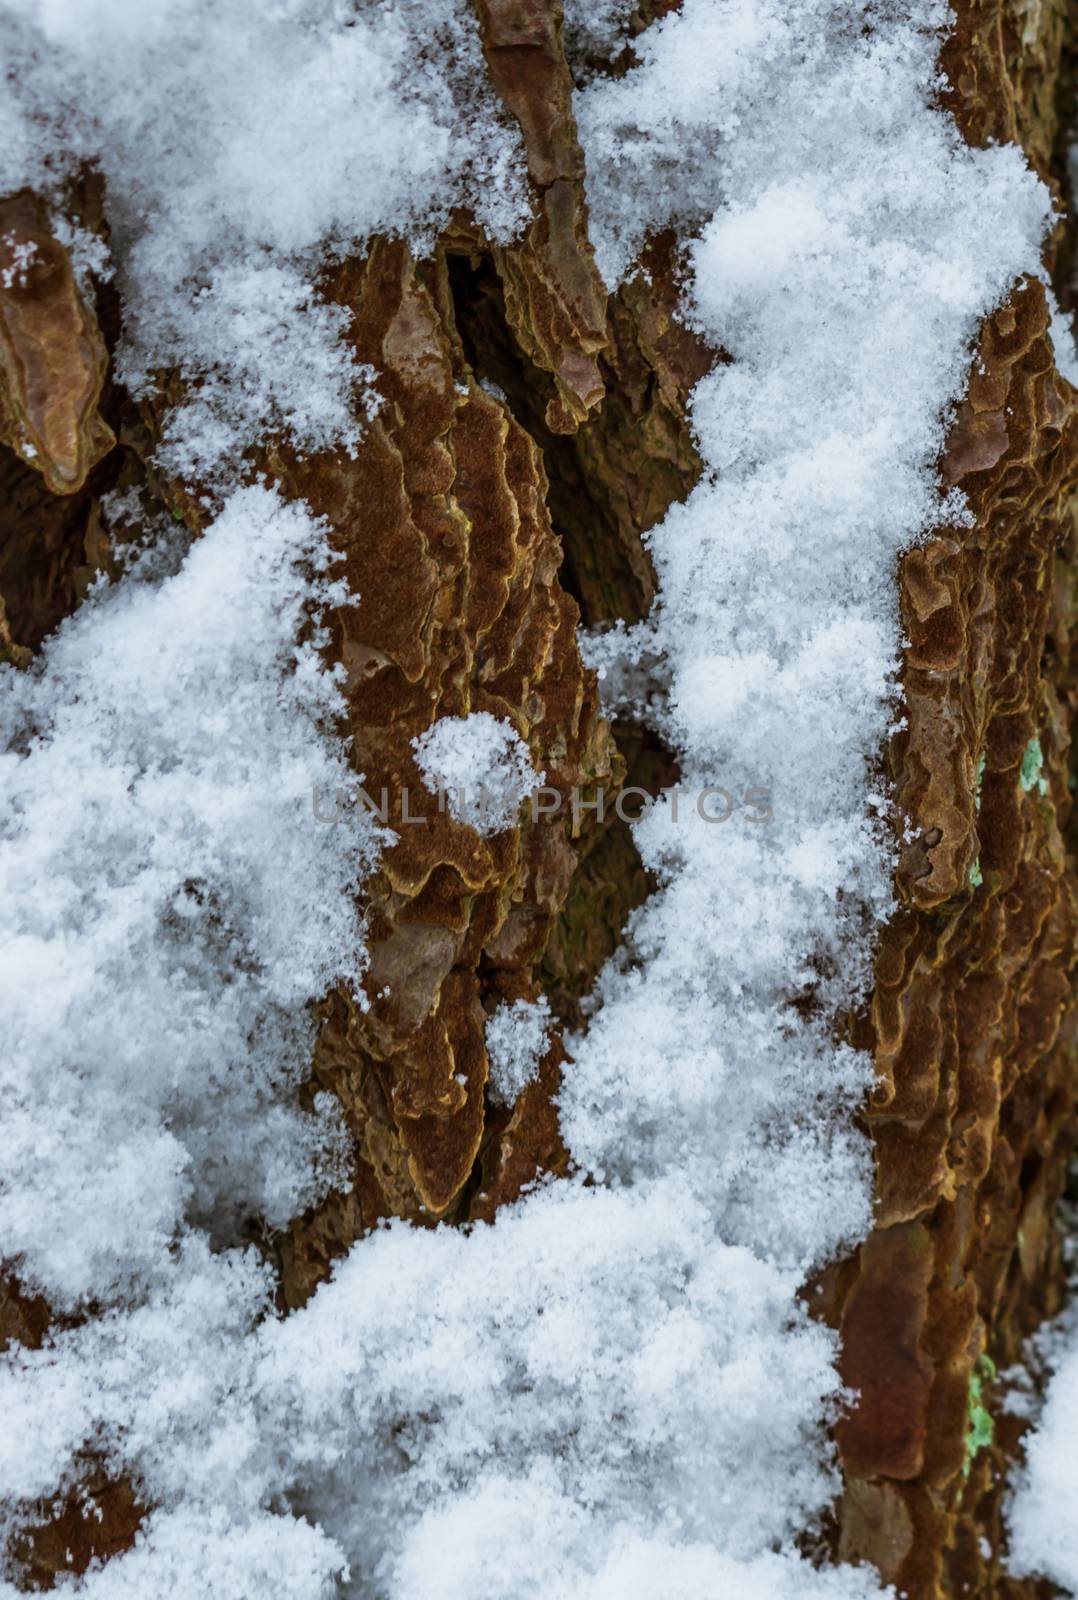 macro close up of tree bark during winter season, tree bark covered in snow, nature texture background by charlottebleijenberg